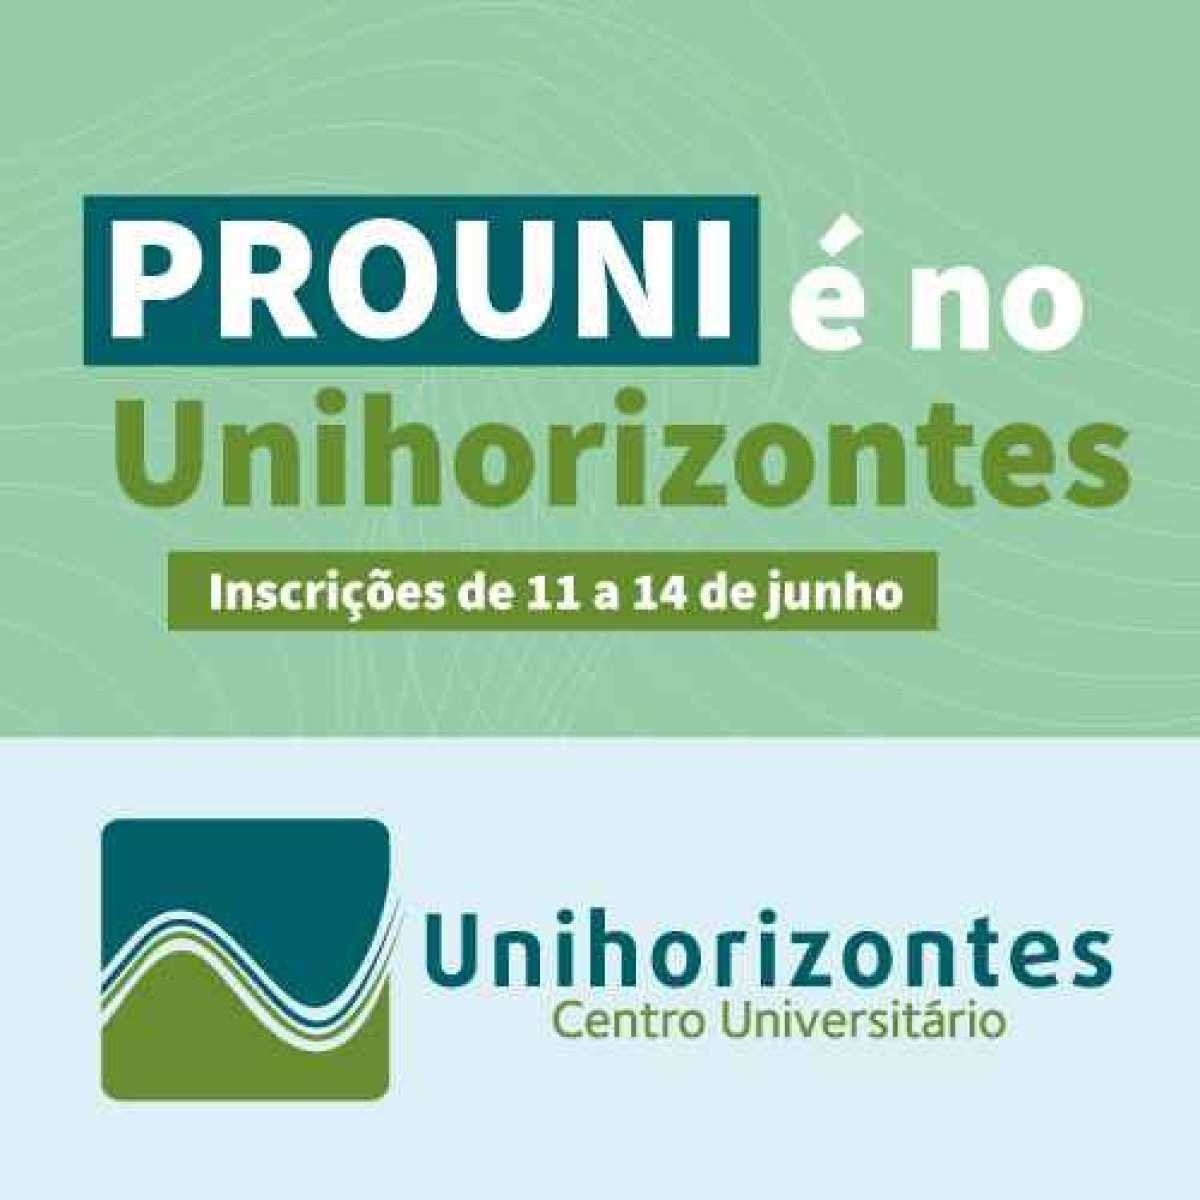 Centro Universitário Unihorizontes